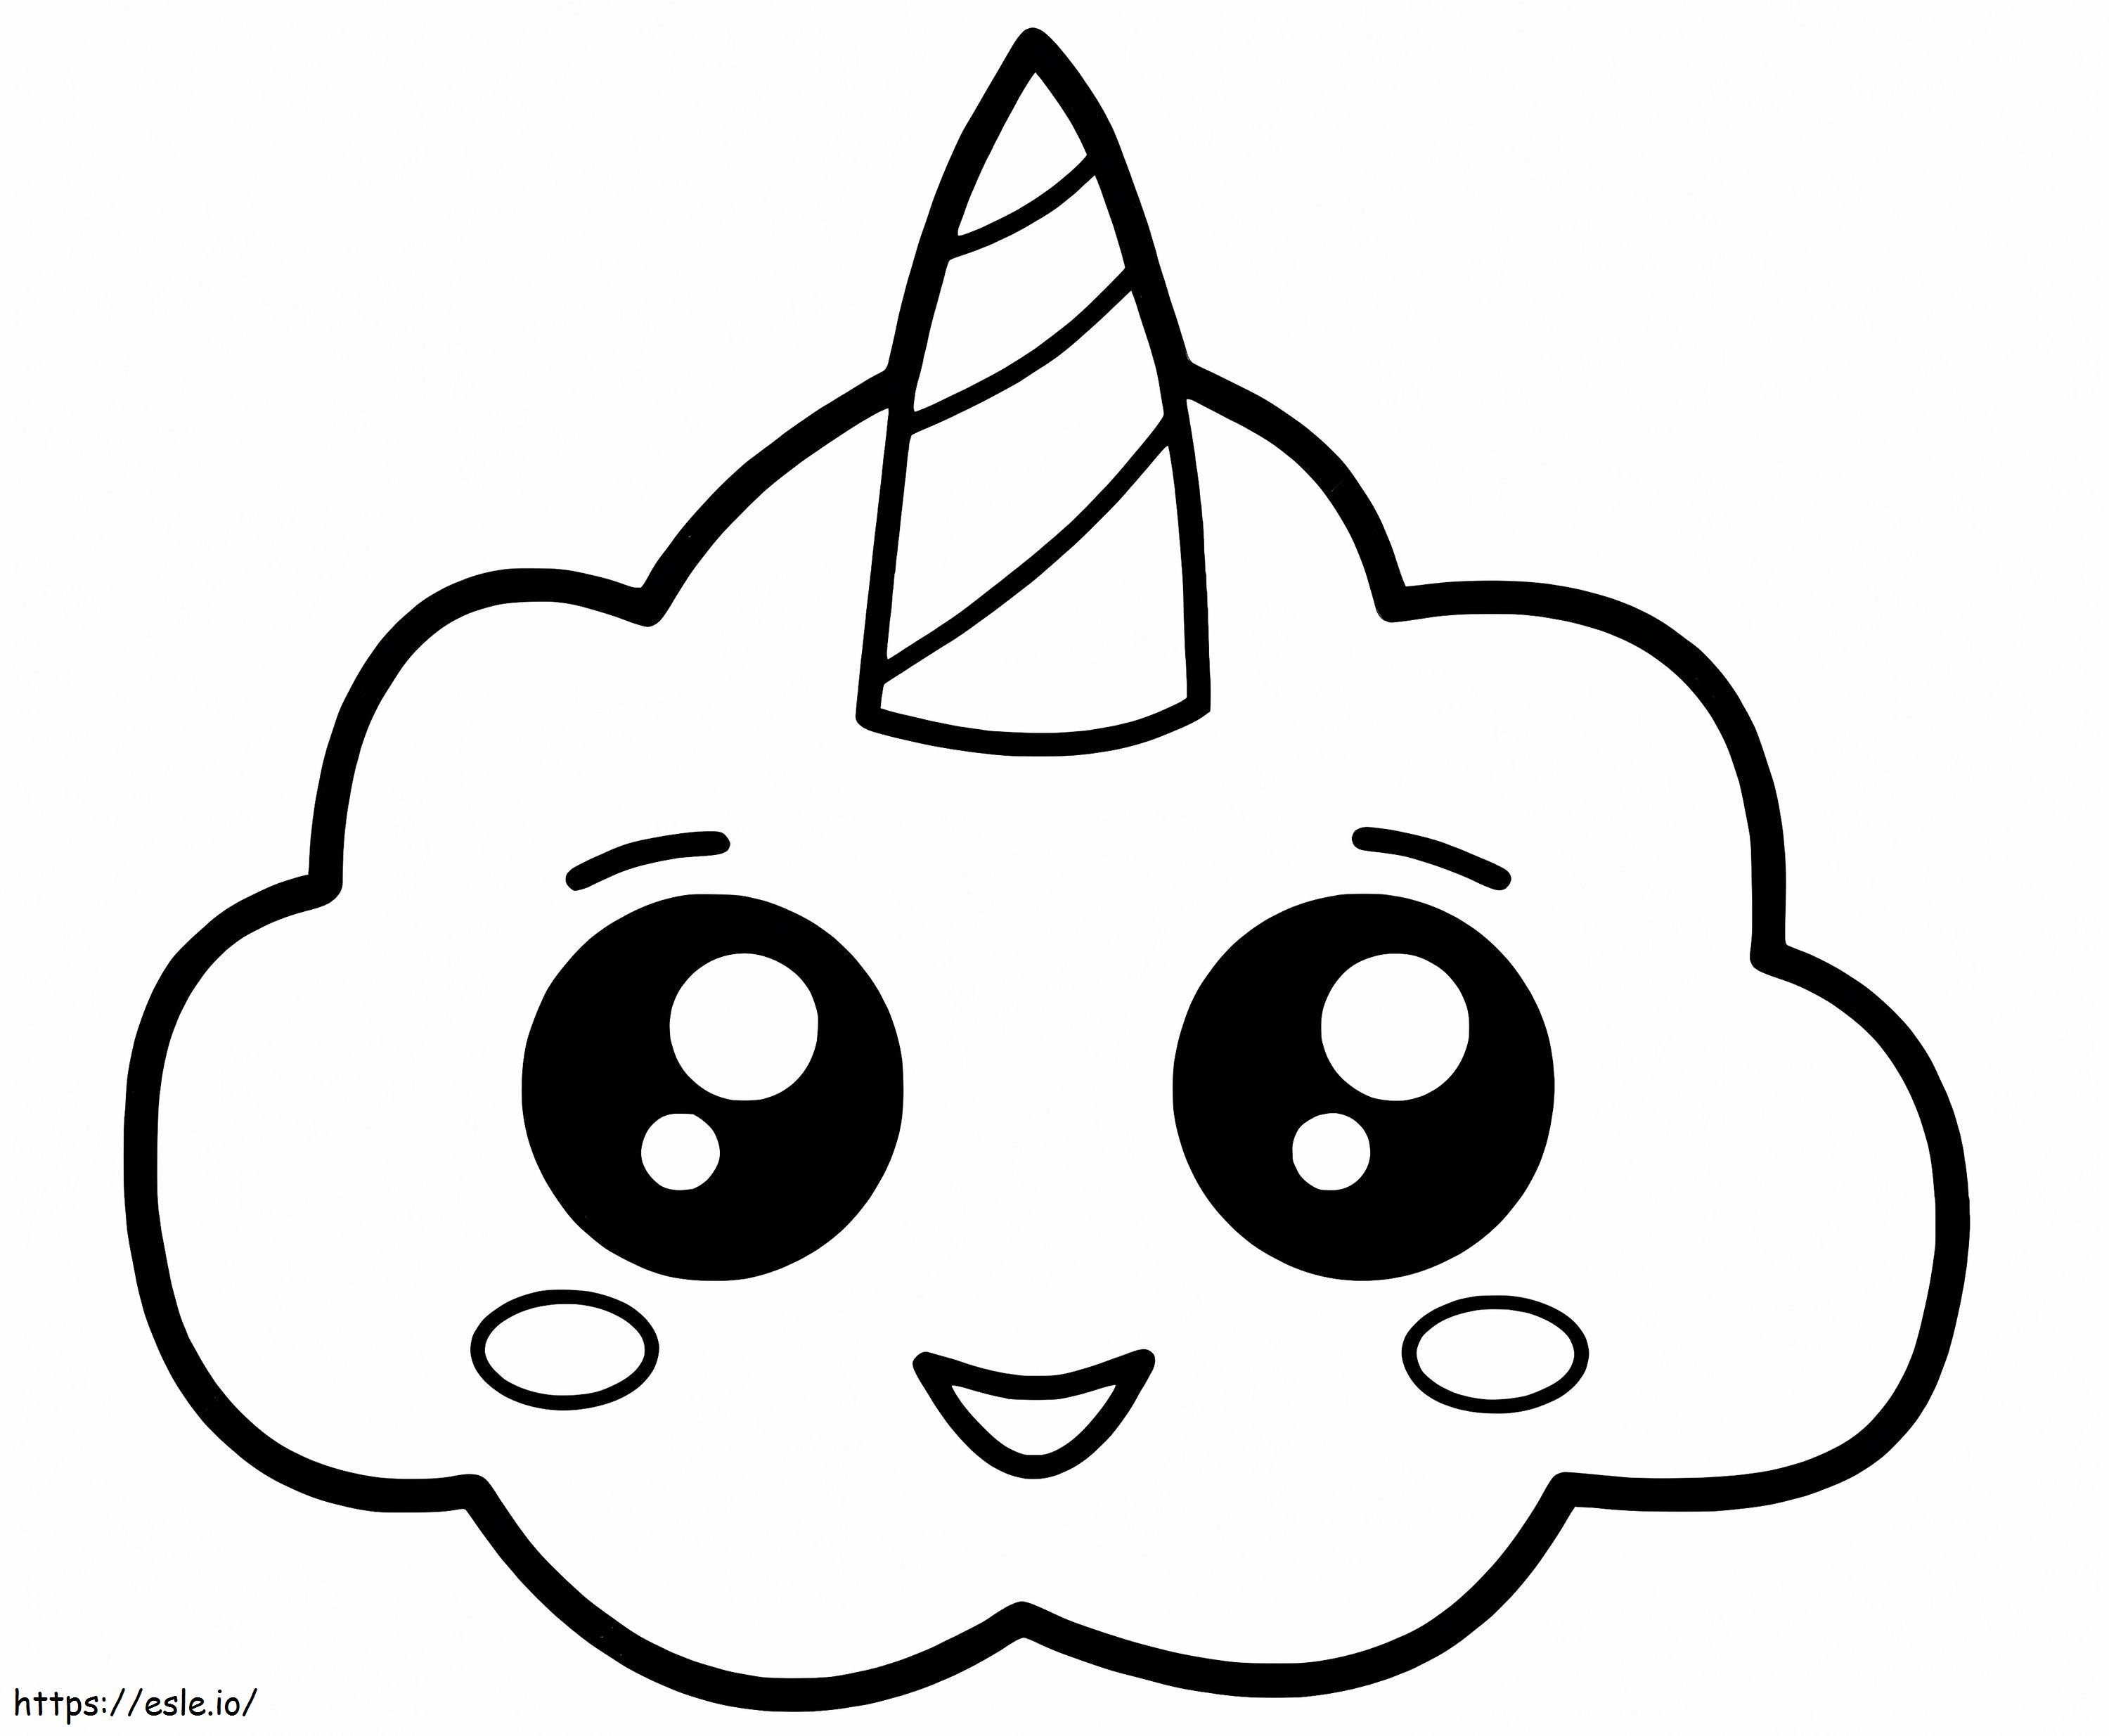 Adorable Unicorn Cloud coloring page